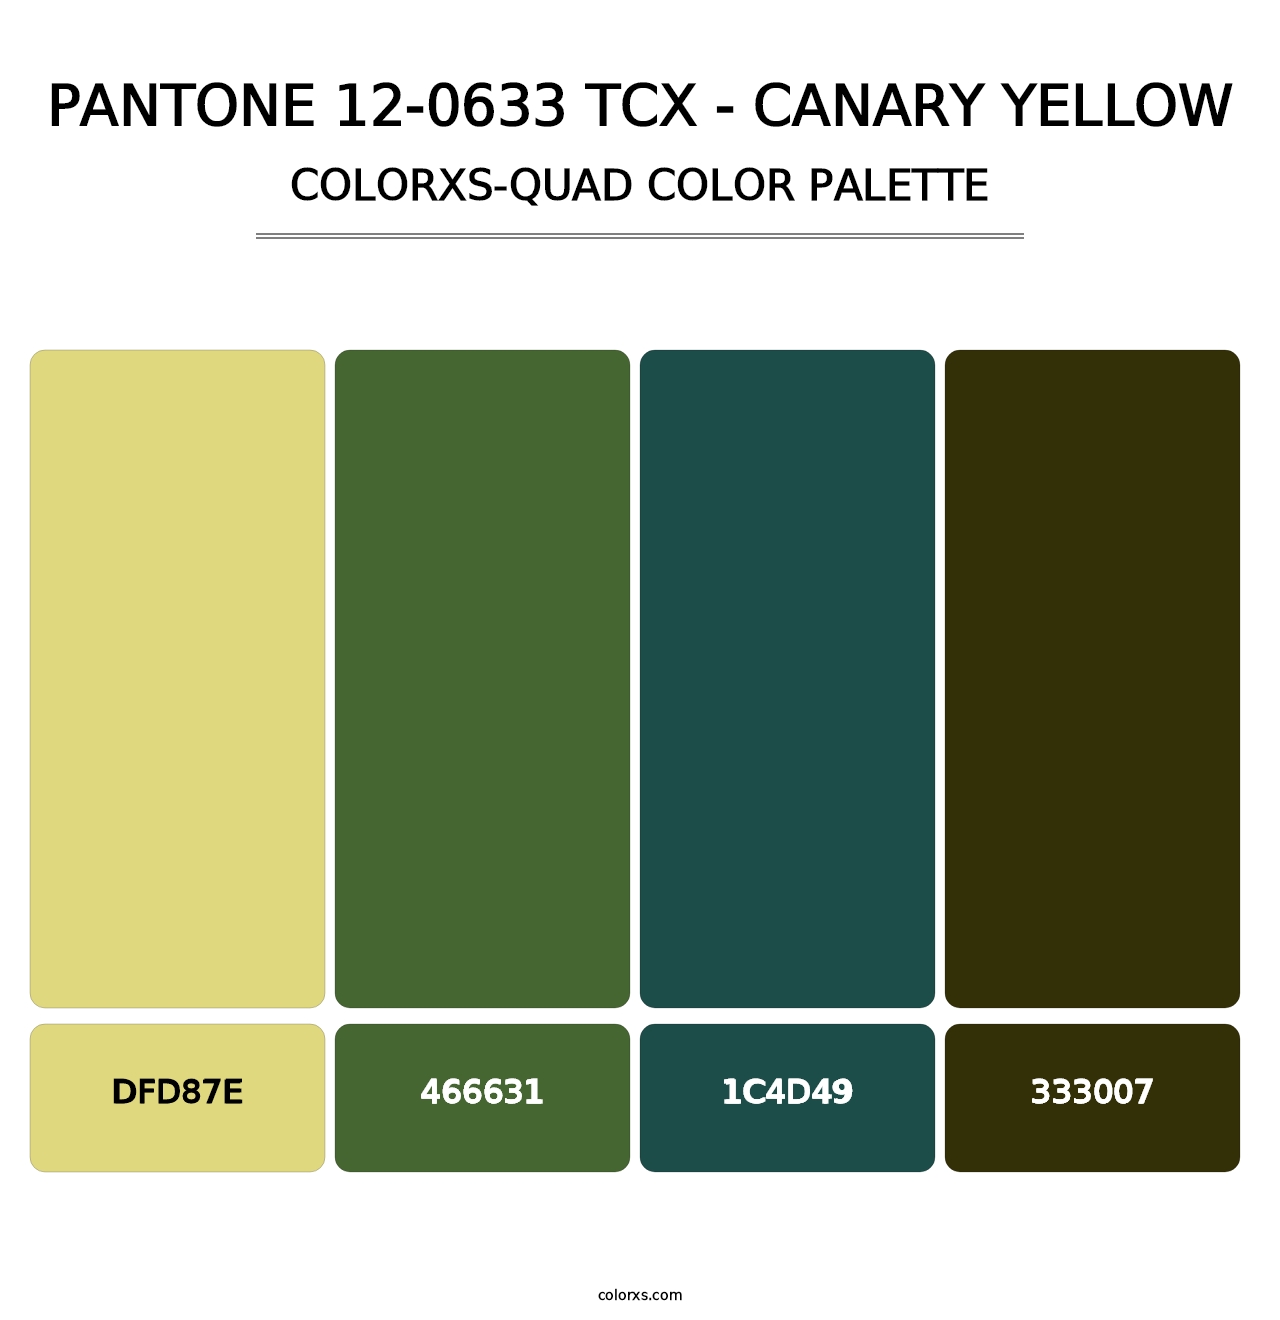 PANTONE 12-0633 TCX - Canary Yellow - Colorxs Quad Palette